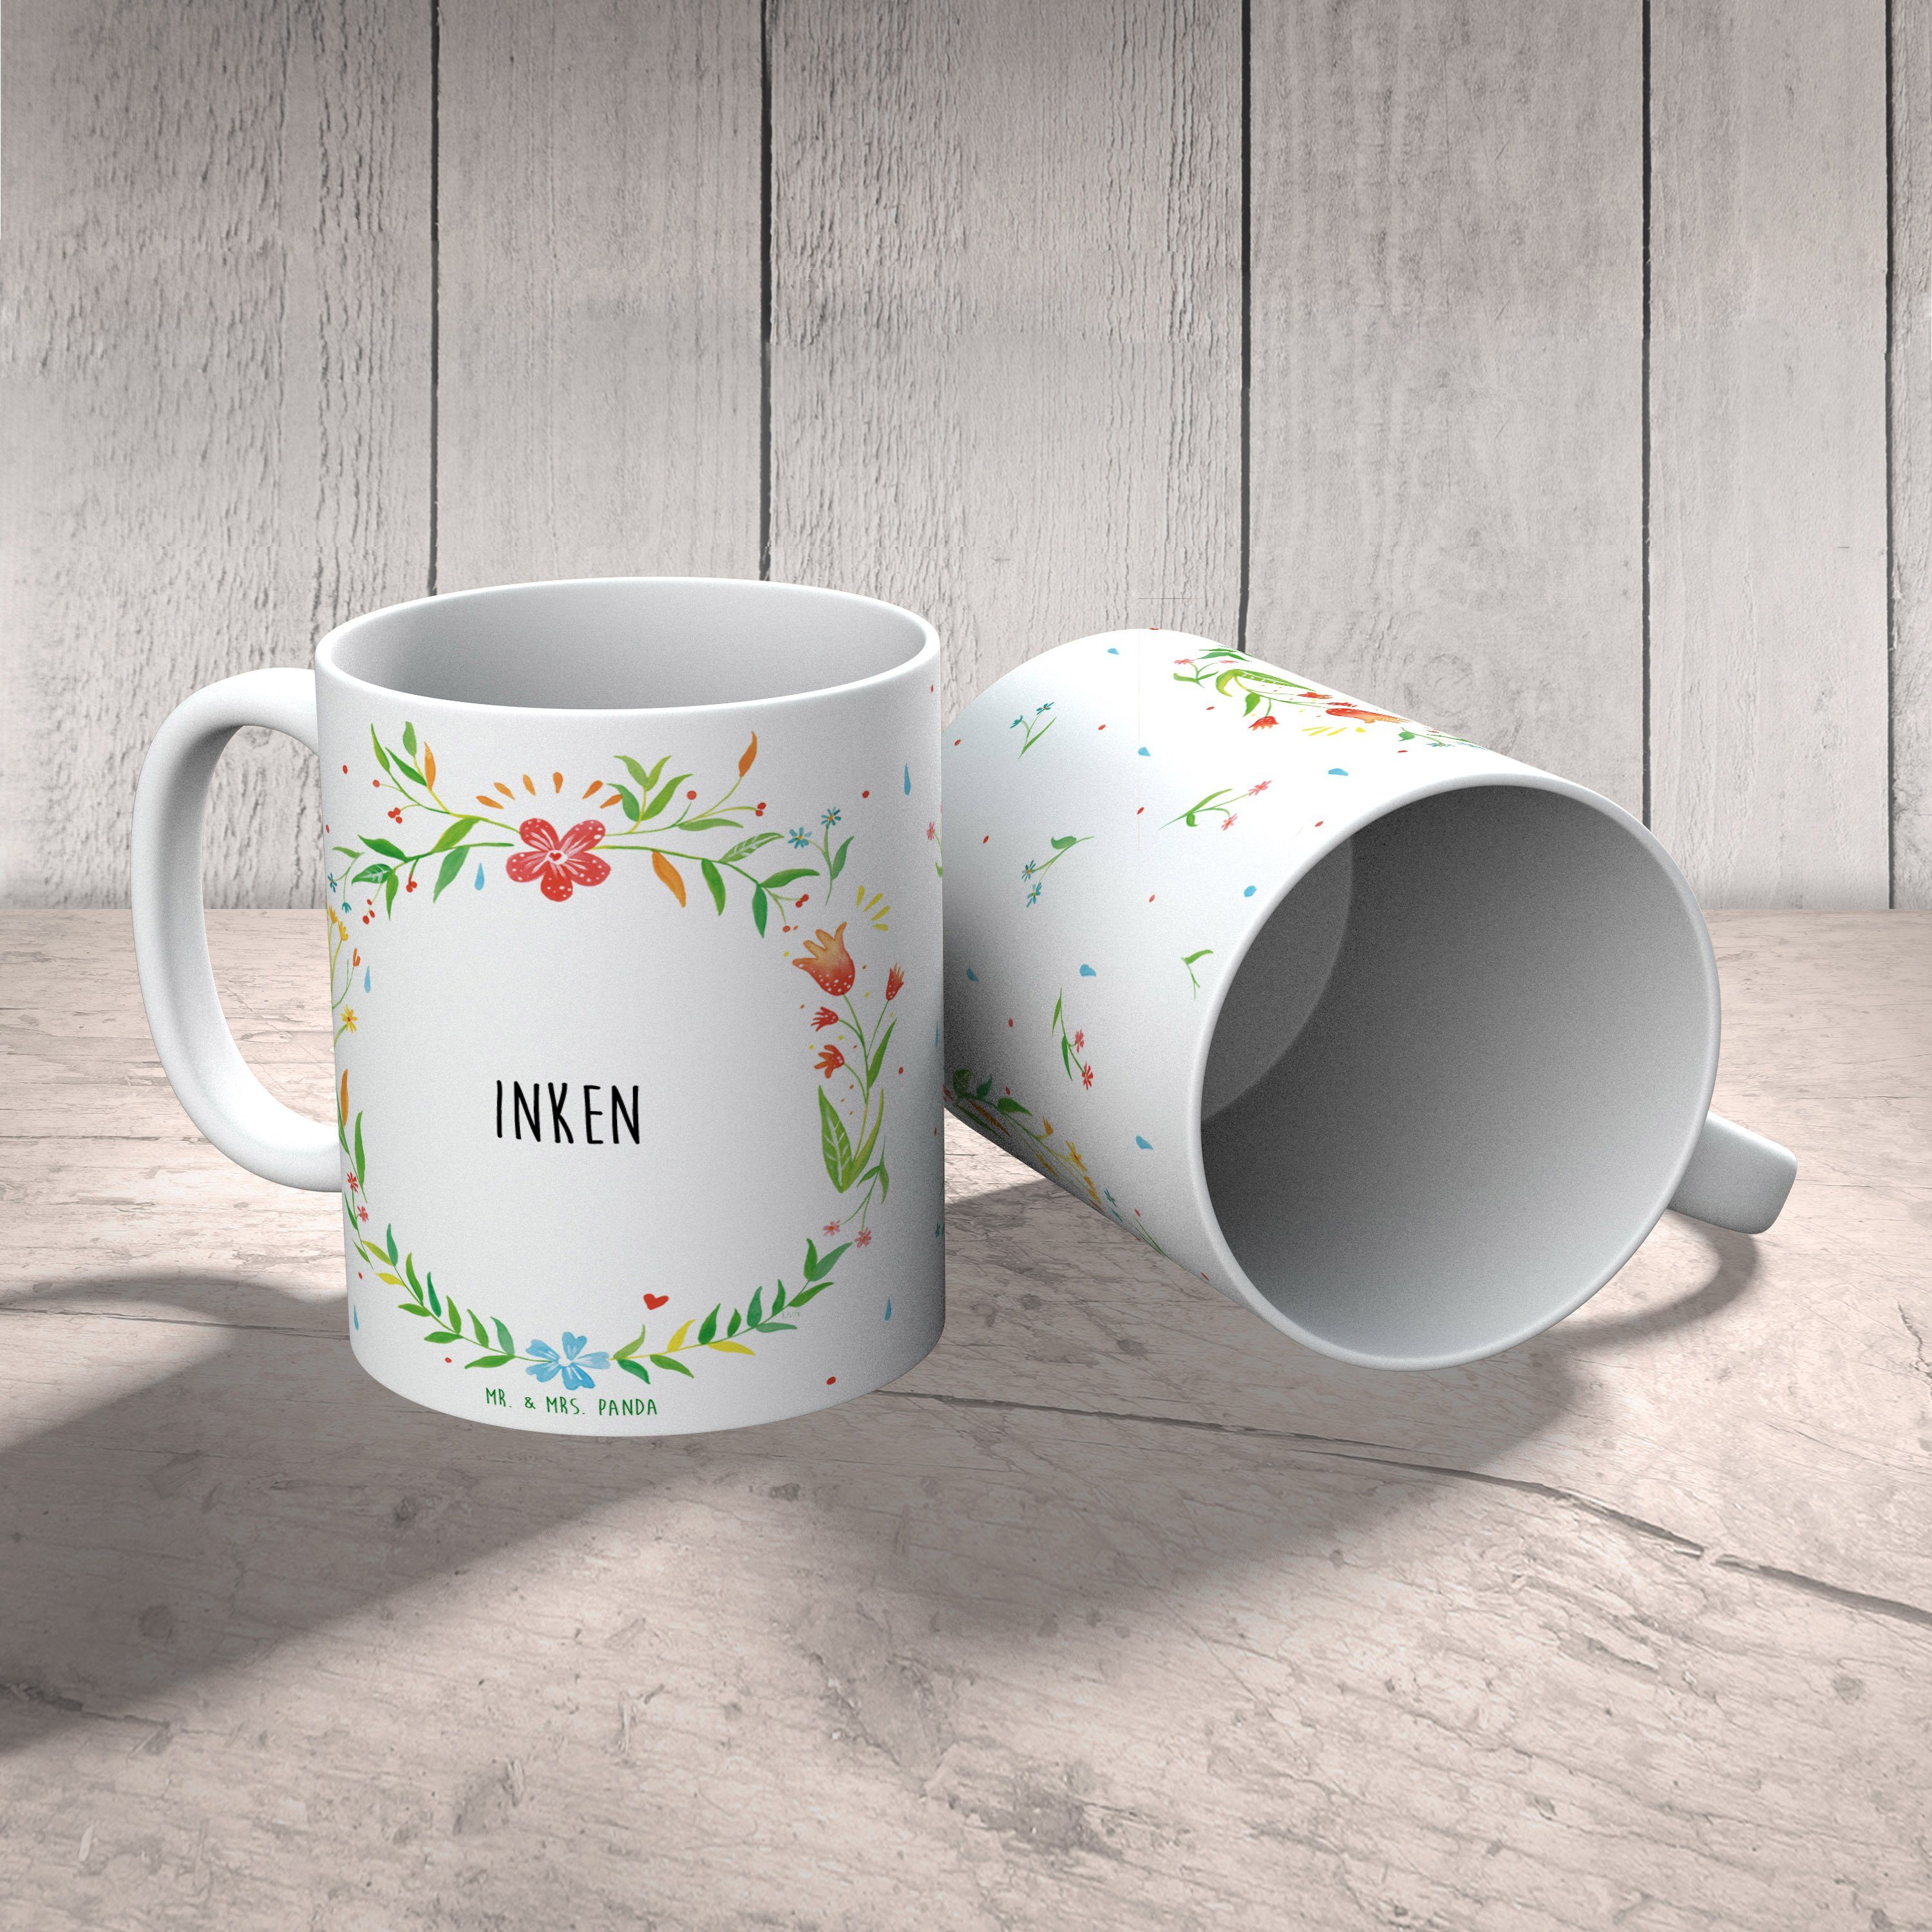 Geschenk, Keramik Tasse Inken Motive, Teetasse, - Tasse Panda Tasse Sprüche, Kaffeetasse, & Mrs. Mr.